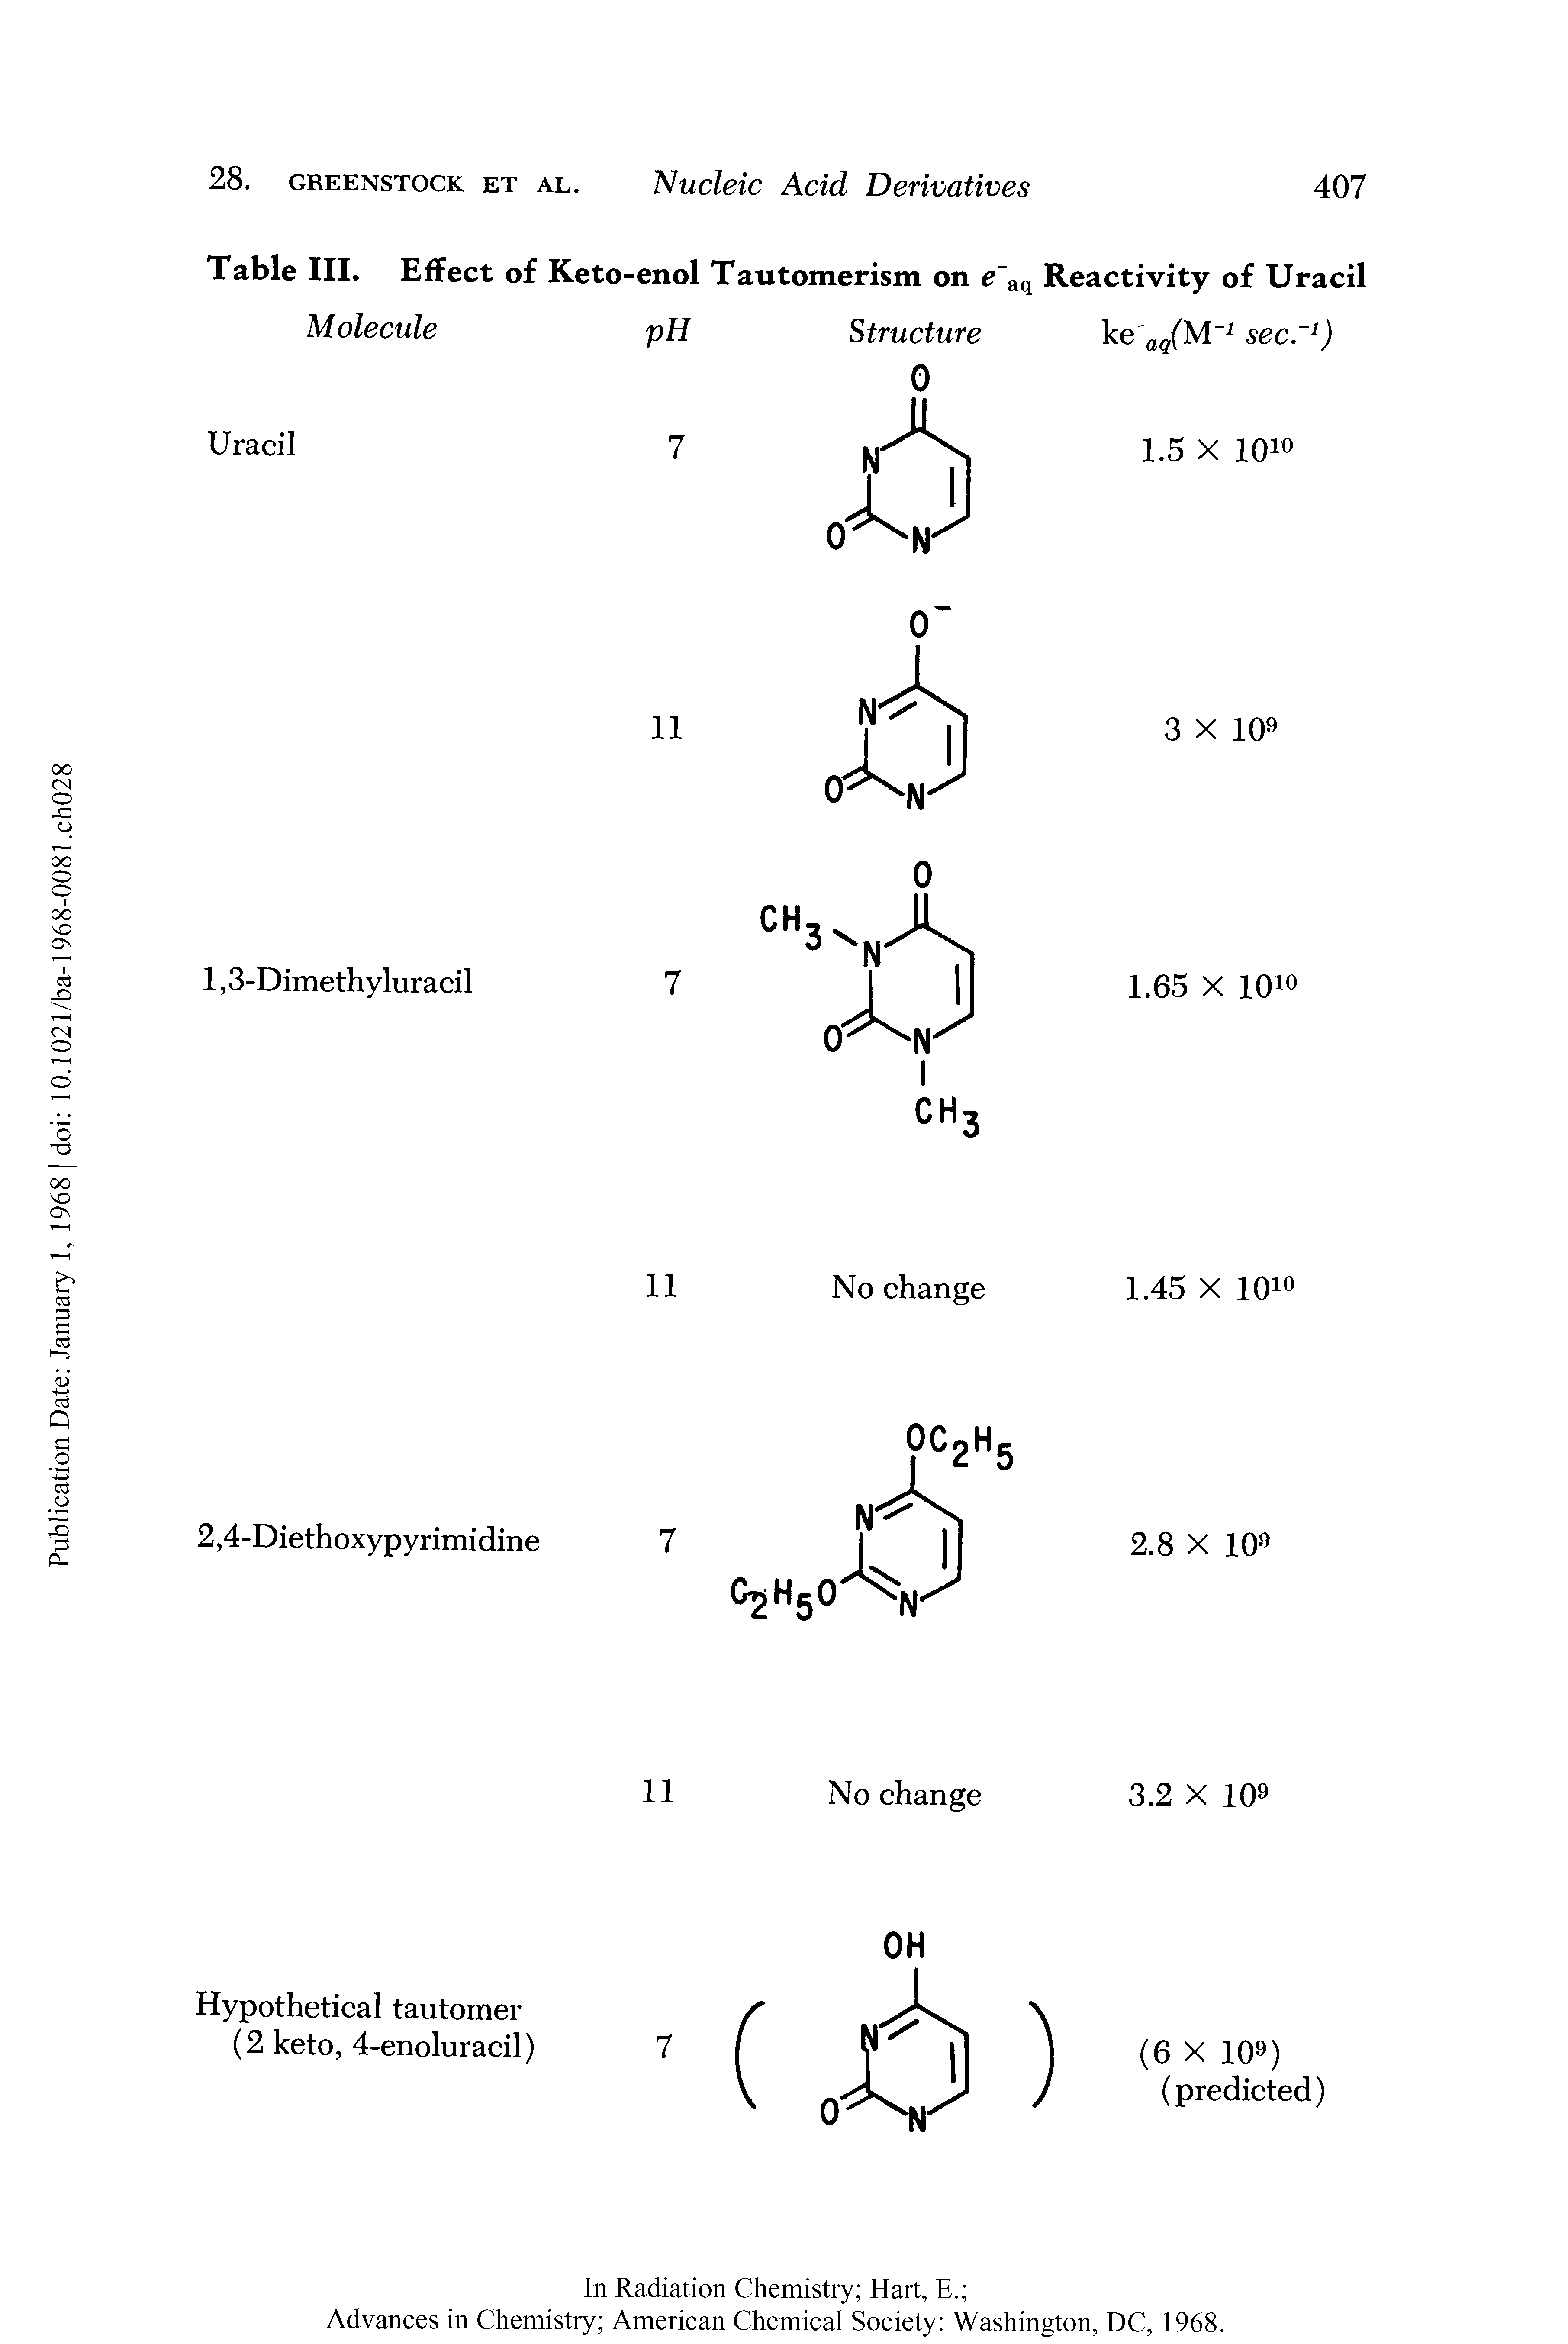 Table III. Effect of Keto-enol Tautomerism on e aq Reactivity of Uracil...